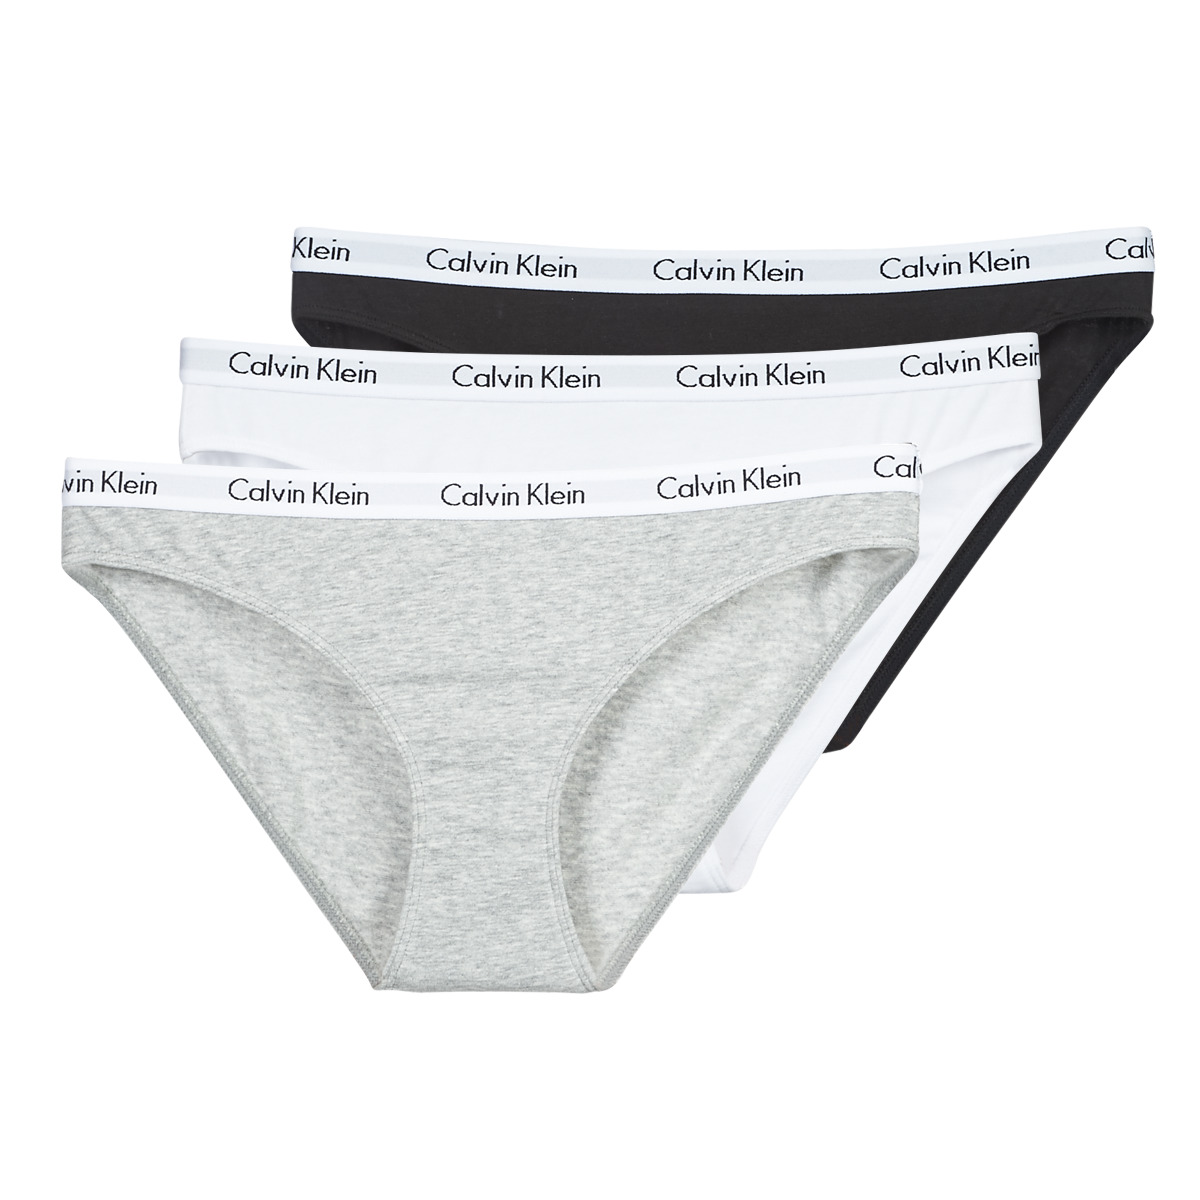 Calvin Klein Jeans CAROUSEL BIKINI 3 Sort / Hvid / Grå / Marmoreret - Gratis fragt Spartoo.dk ! - Undertøj Trusser Dame 313,00 Kr